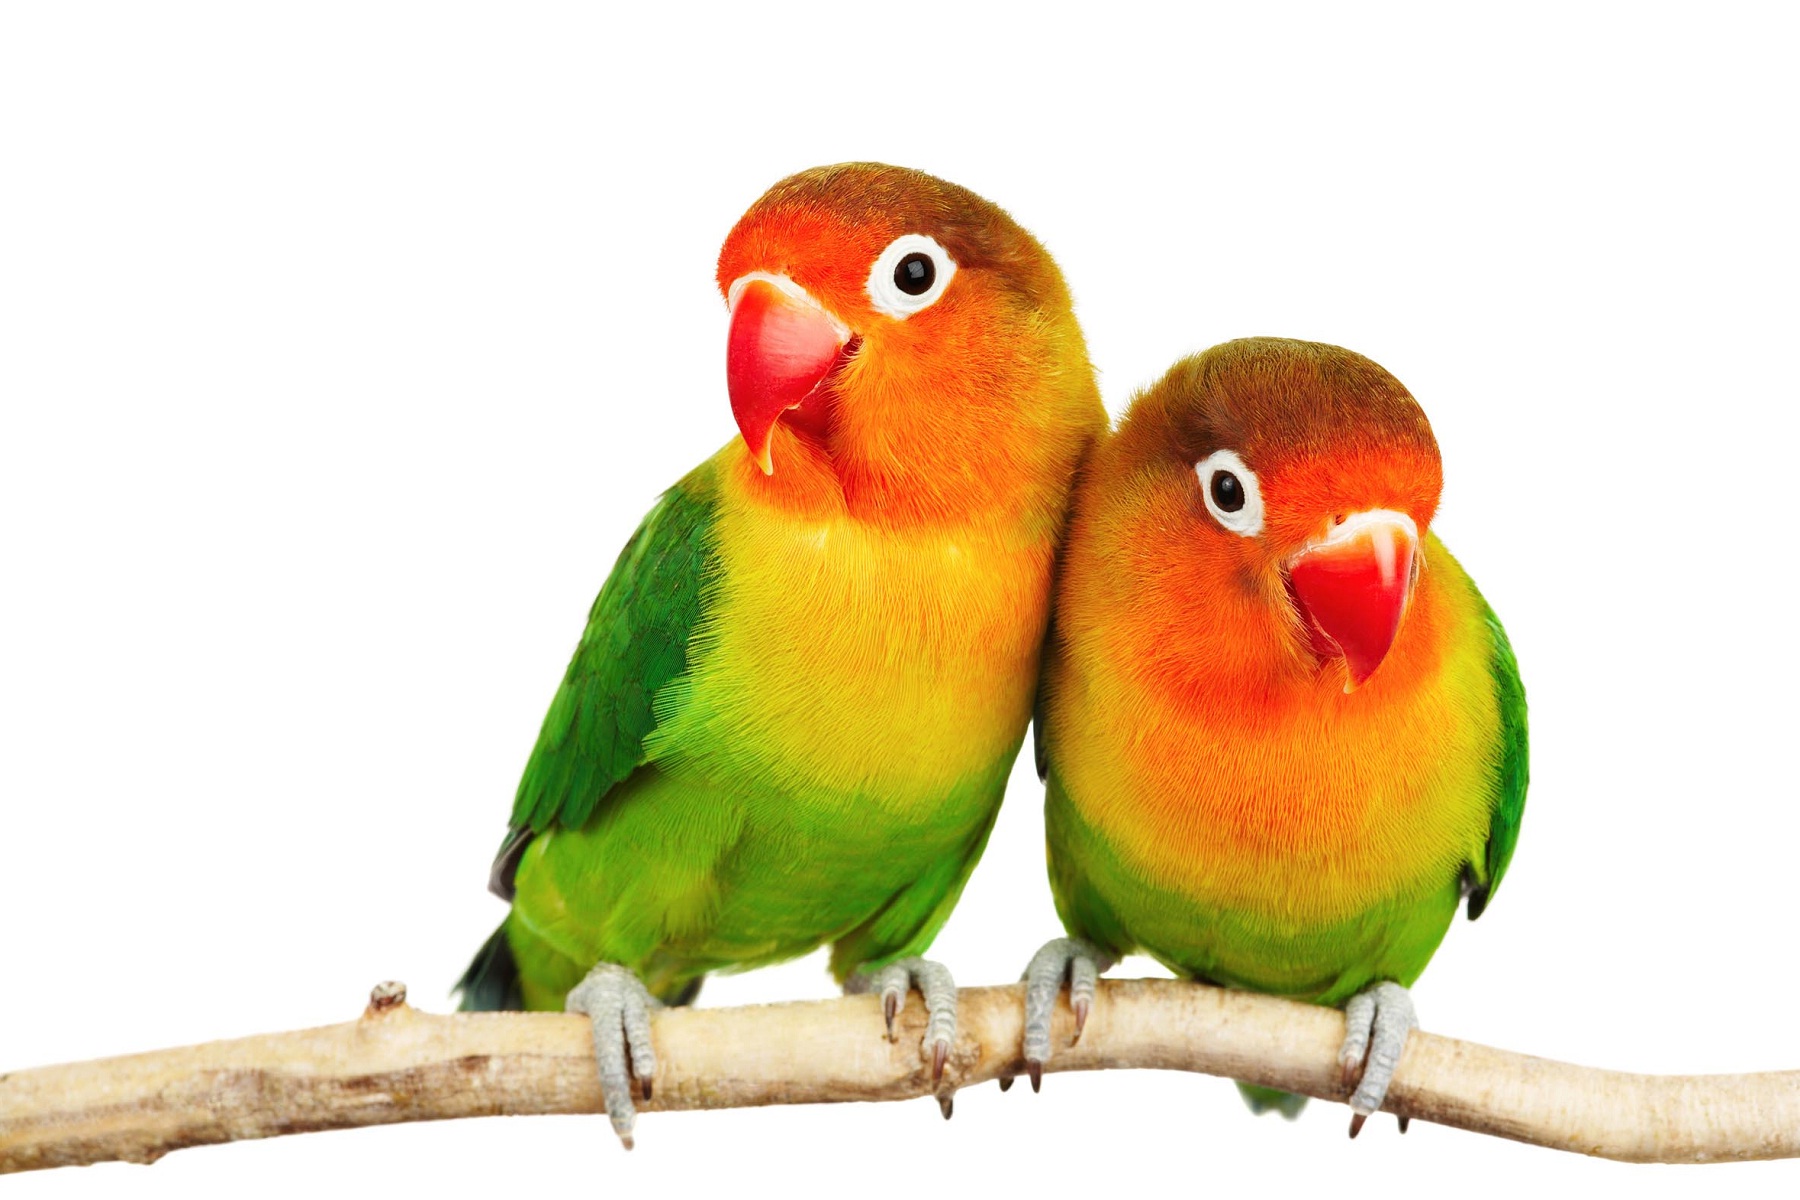 Love birds images